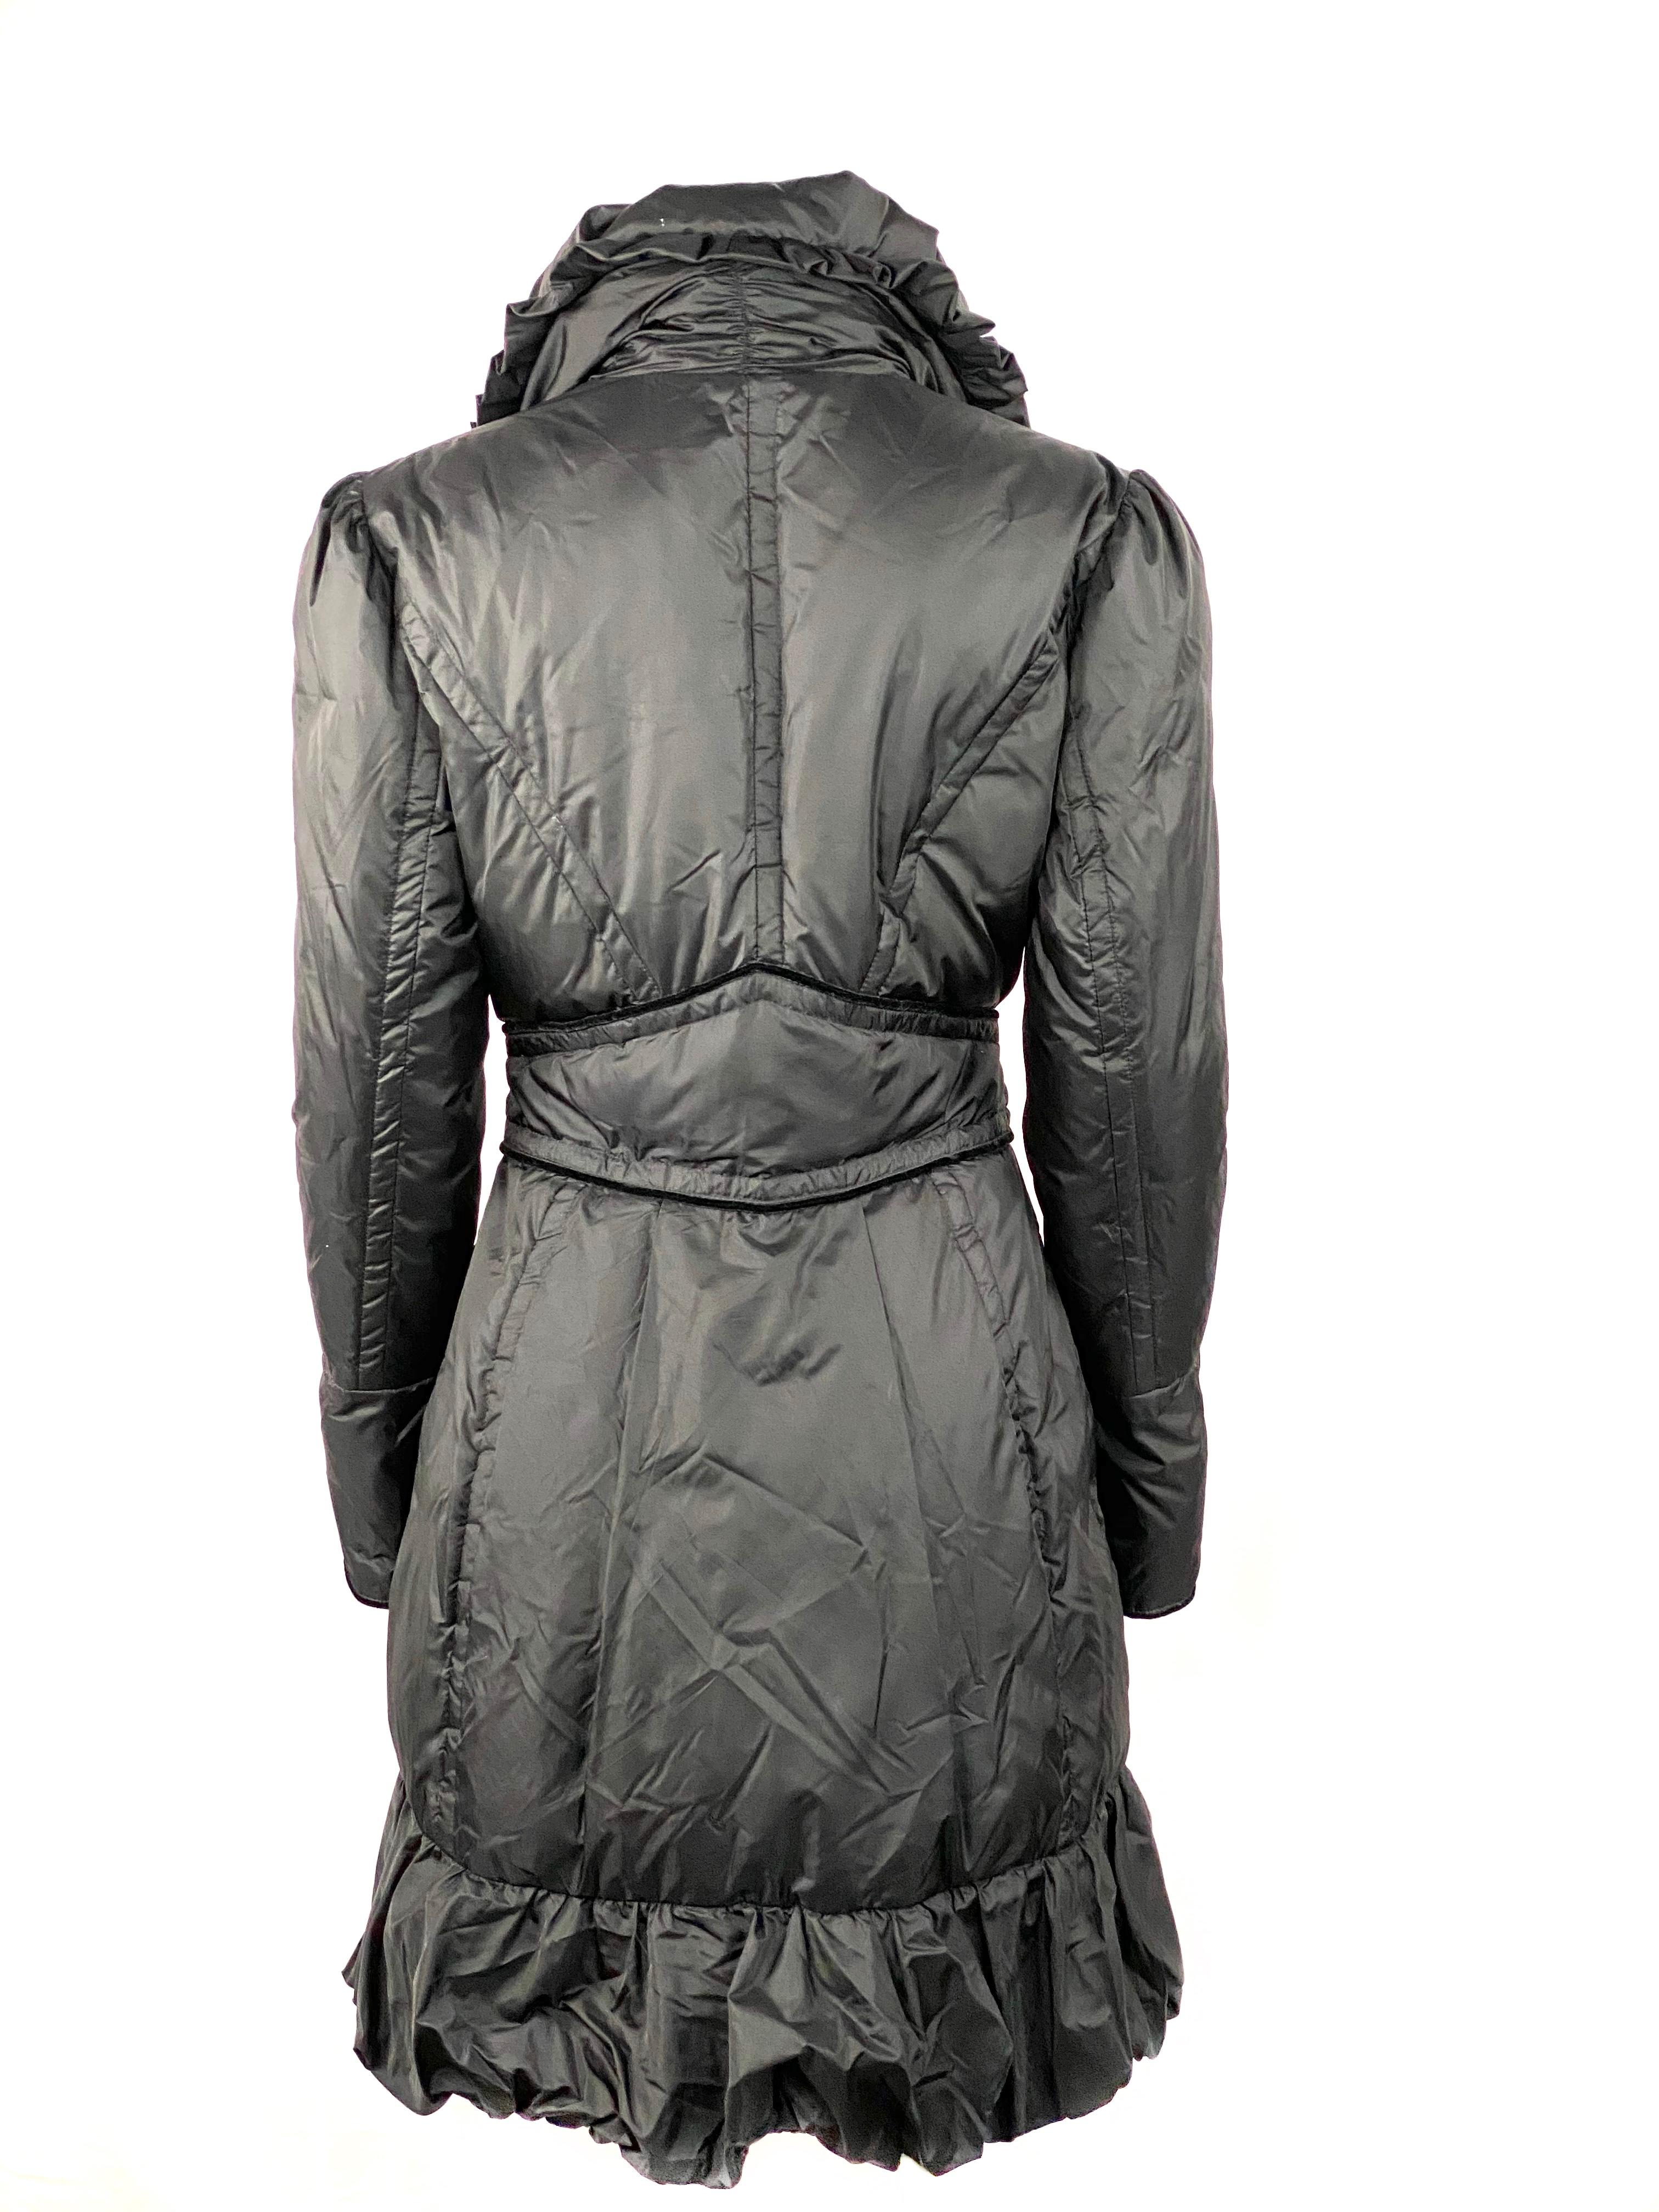 Emanual Ungaro Black Goose Dawn Long Puffer Jacket Coat Size 40  5